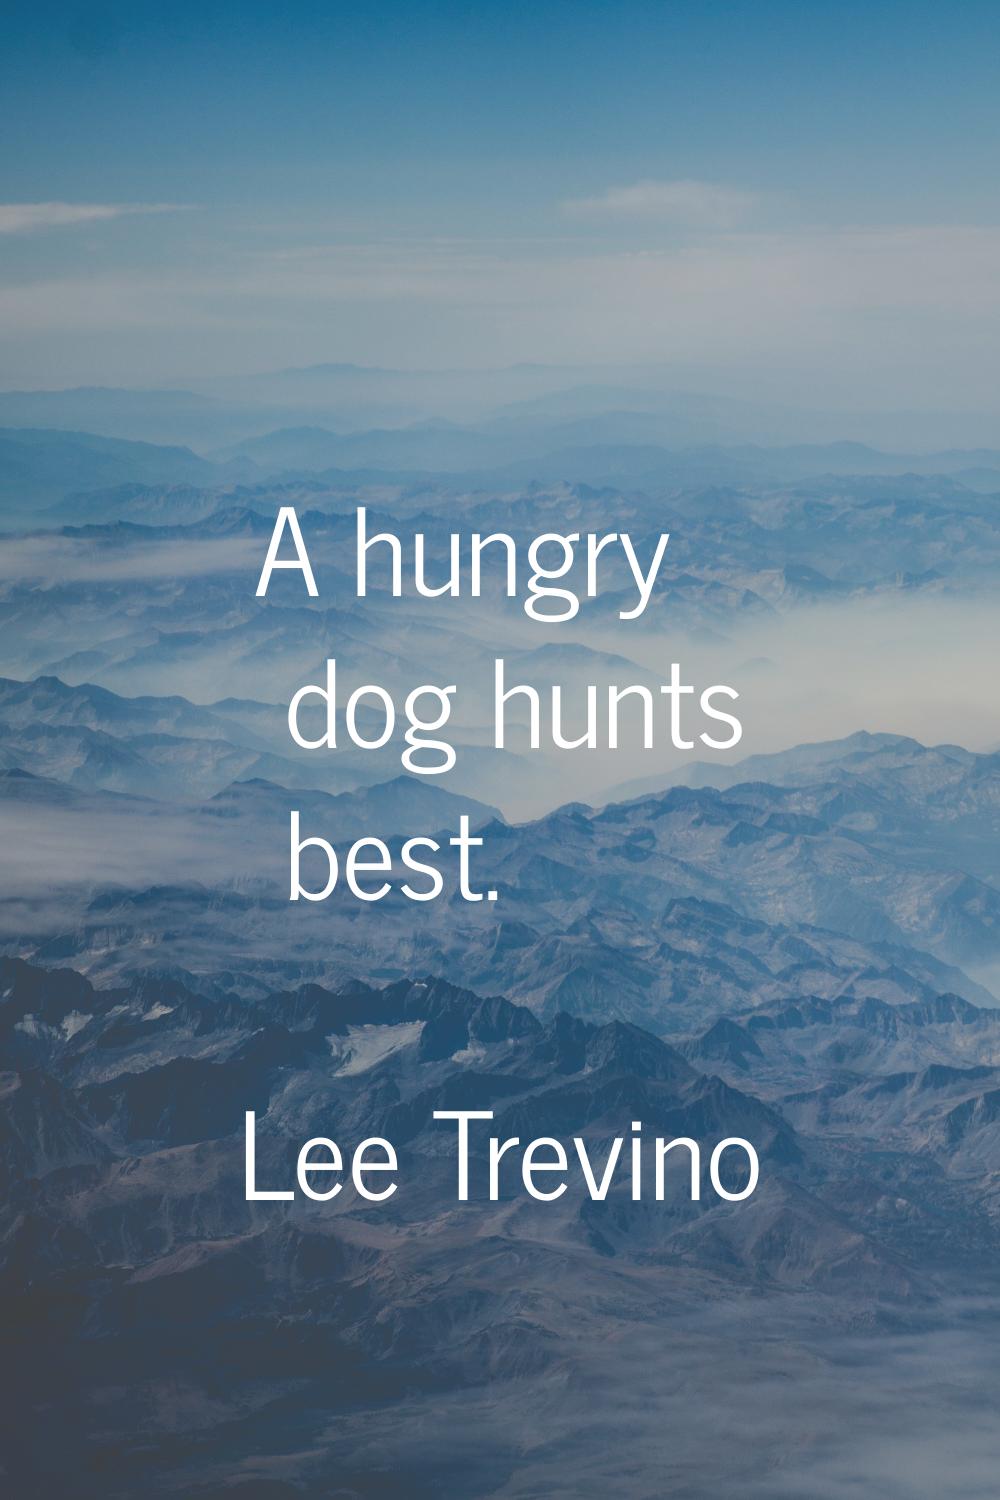 A hungry dog hunts best.